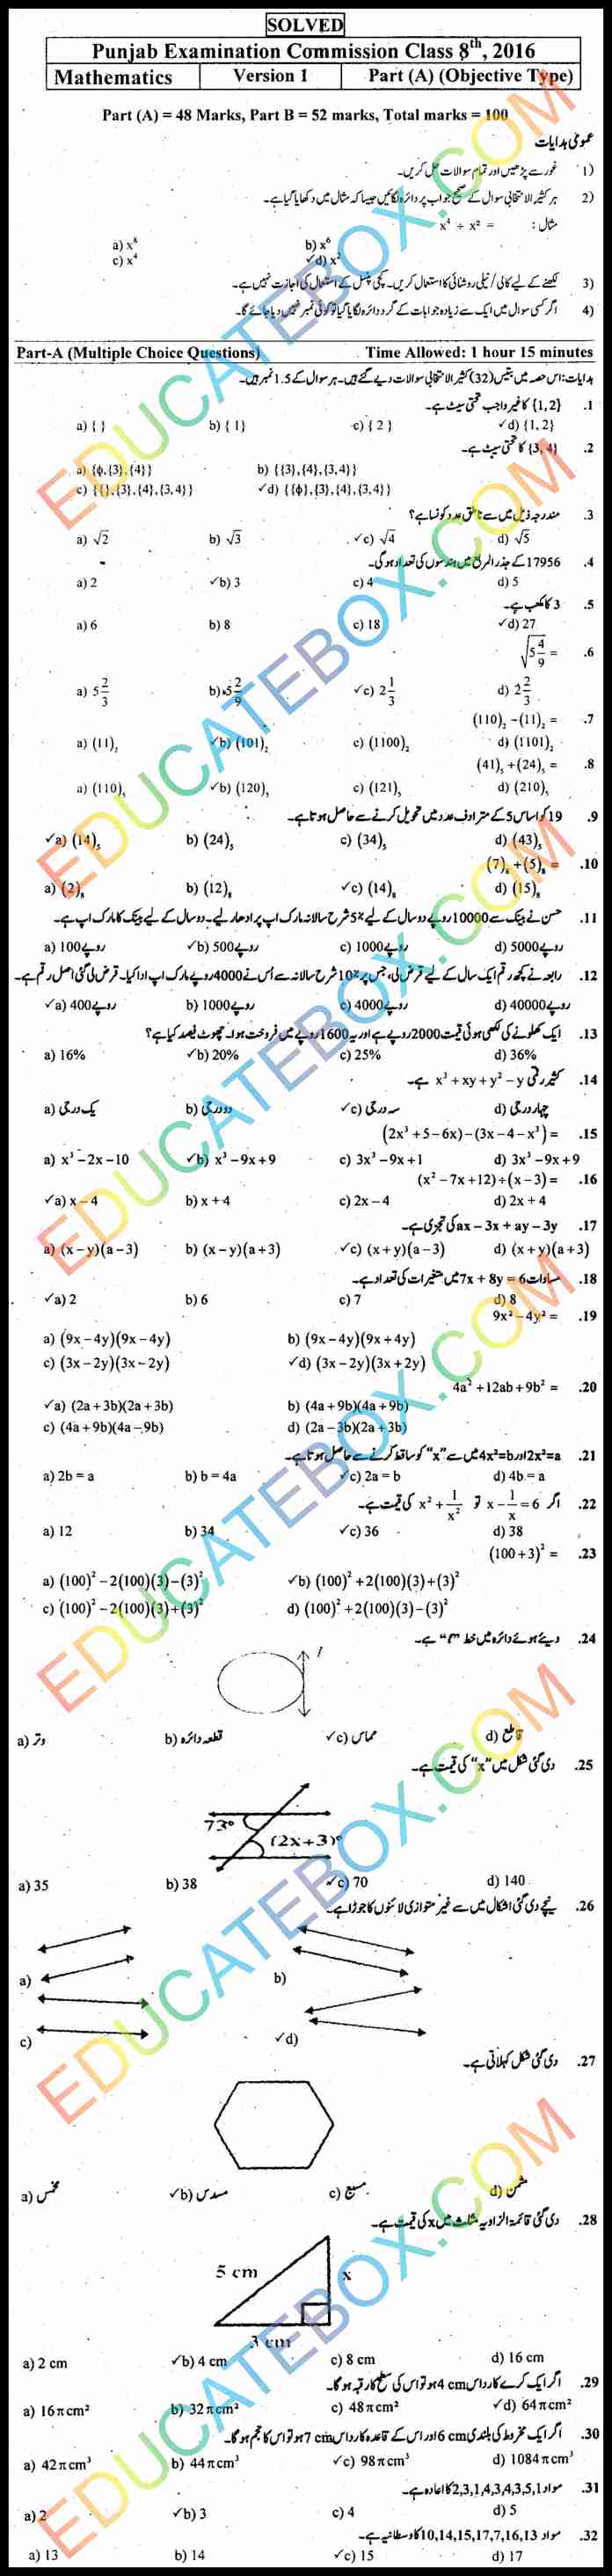 Past Paper 8th Class Maths 2016 Solved Paper Punjab Board (PEC) Objective Type Urdu Medium Version 1 اپ ٹو ڈیٹ پیپر ہشتم کلاس ریاضی حل شدہ پیپر پنجاب بورڈ اوبجیکٹیو ٹائپ انگلش میڈیم ورزن 1